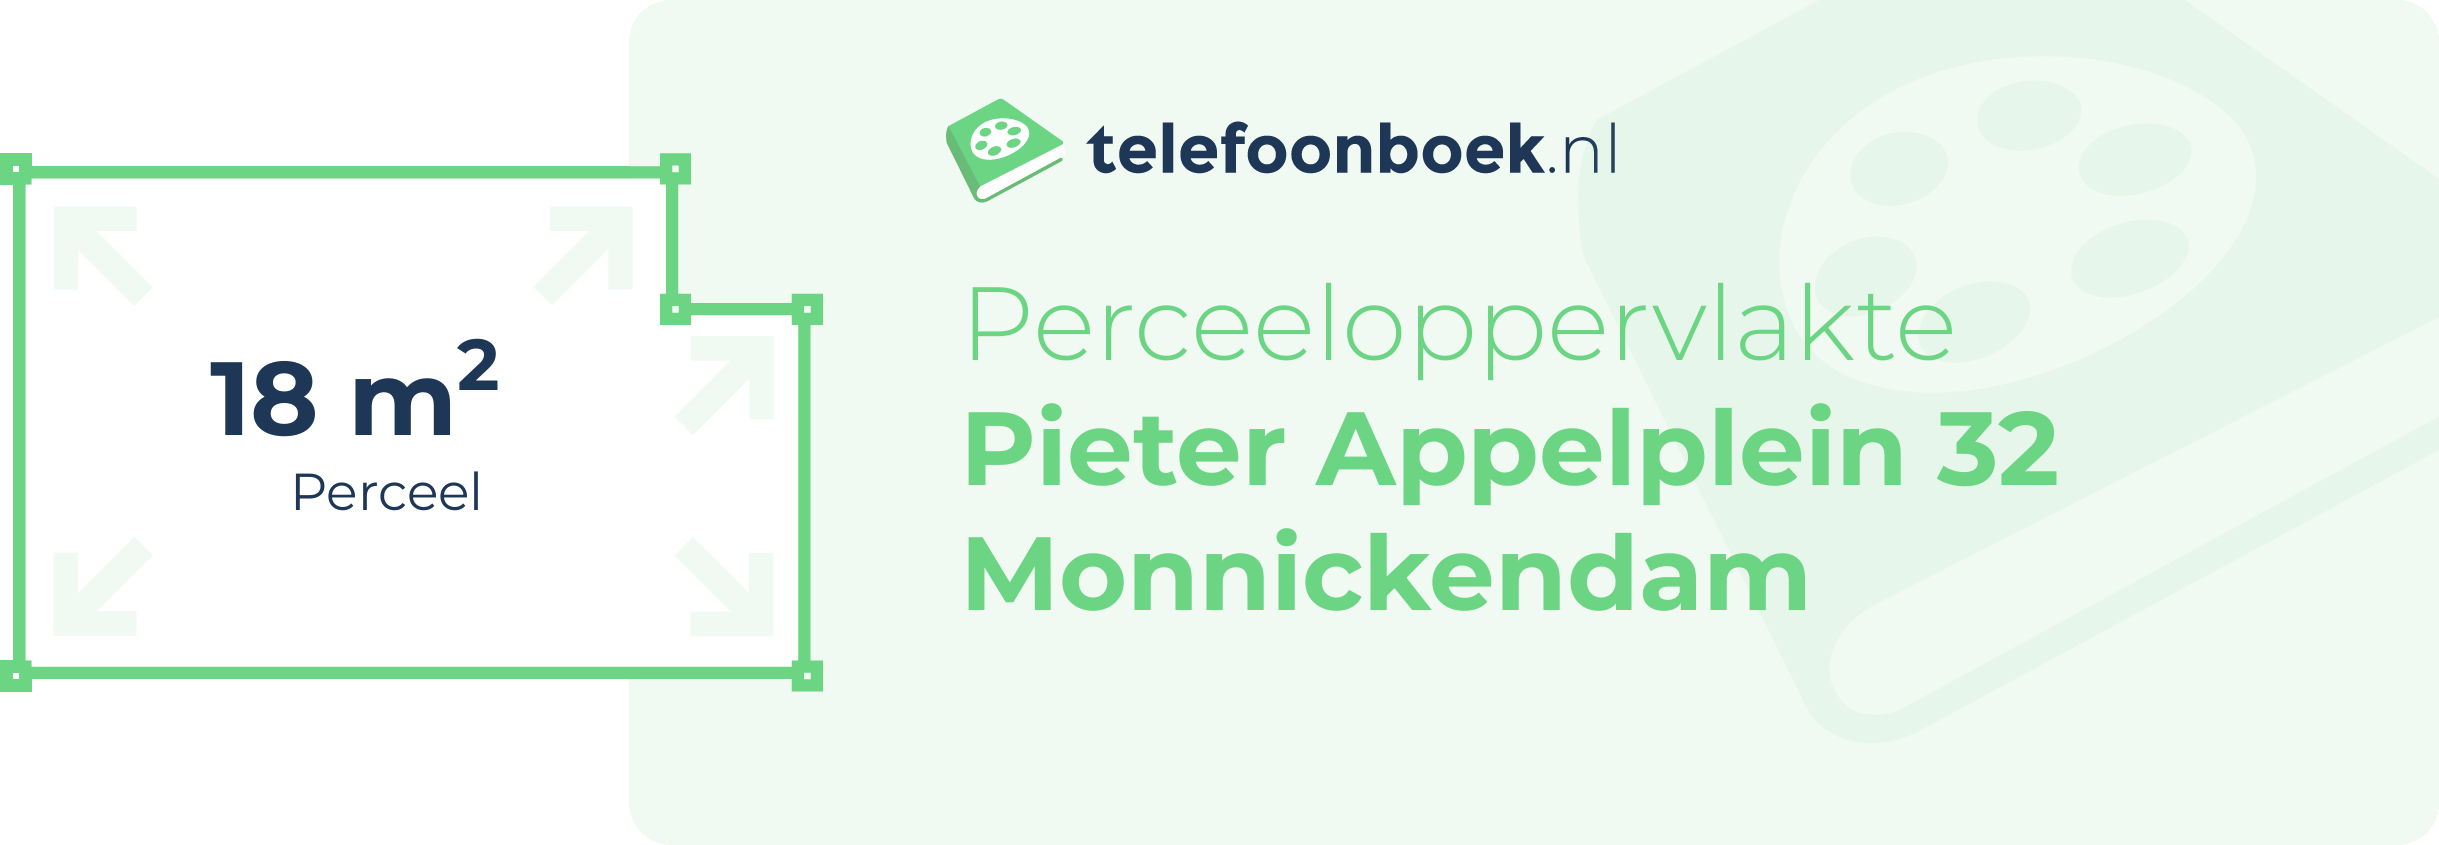 Perceeloppervlakte Pieter Appelplein 32 Monnickendam